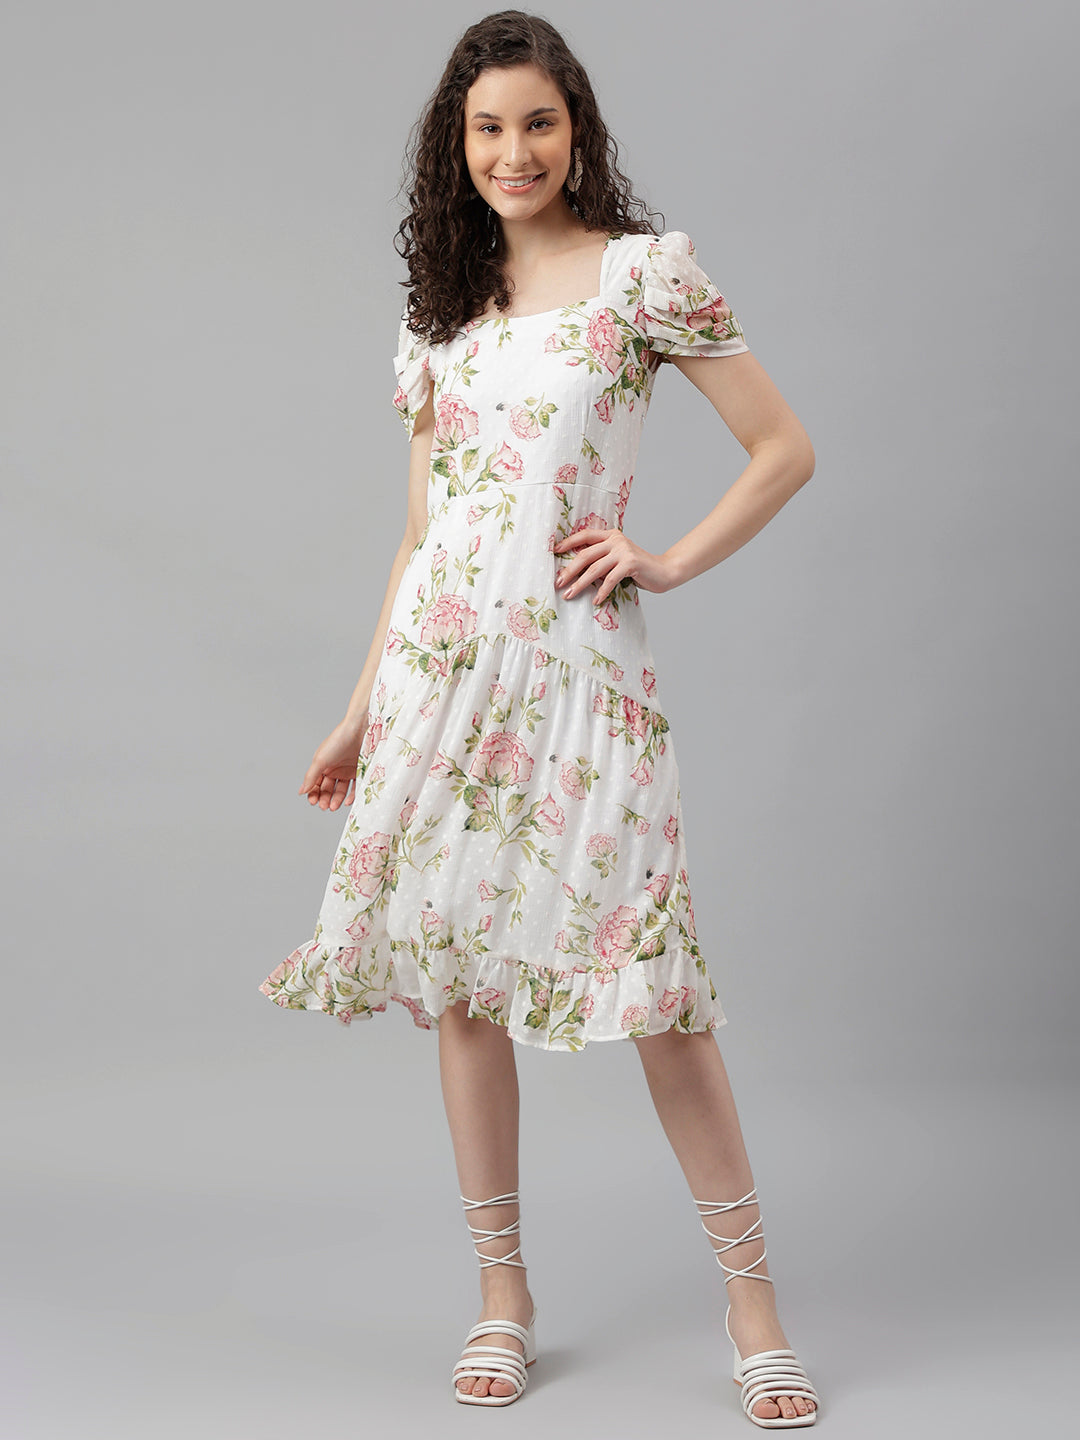 Ivory Half Sleeve Floral Printed A-Line Dress